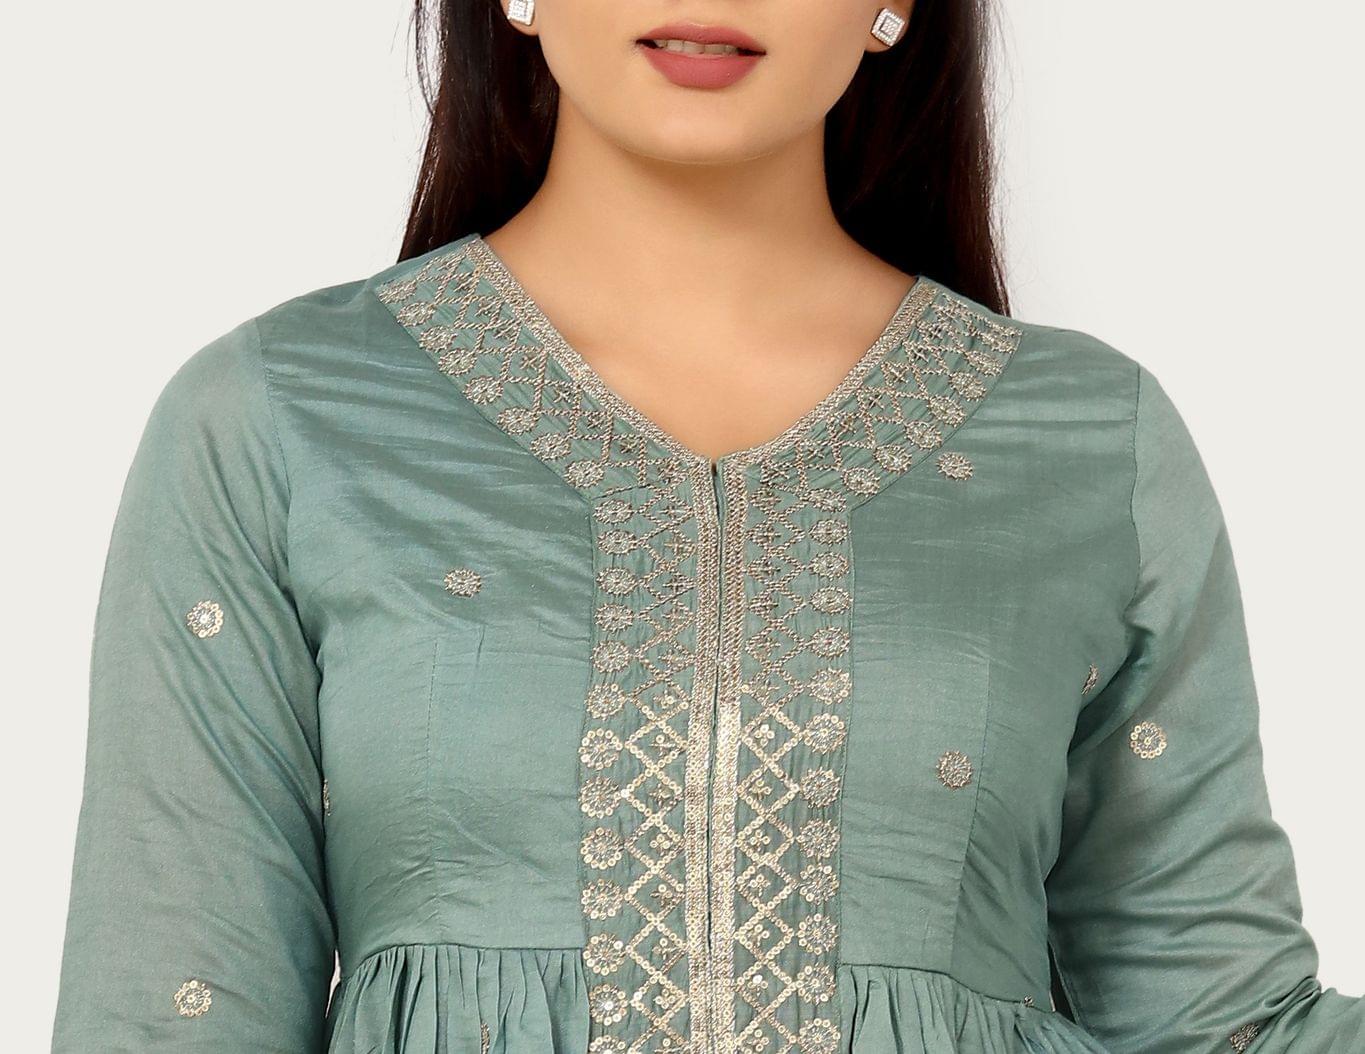 Nilika Light Green Cotton Silk Embroidered Sharara Set